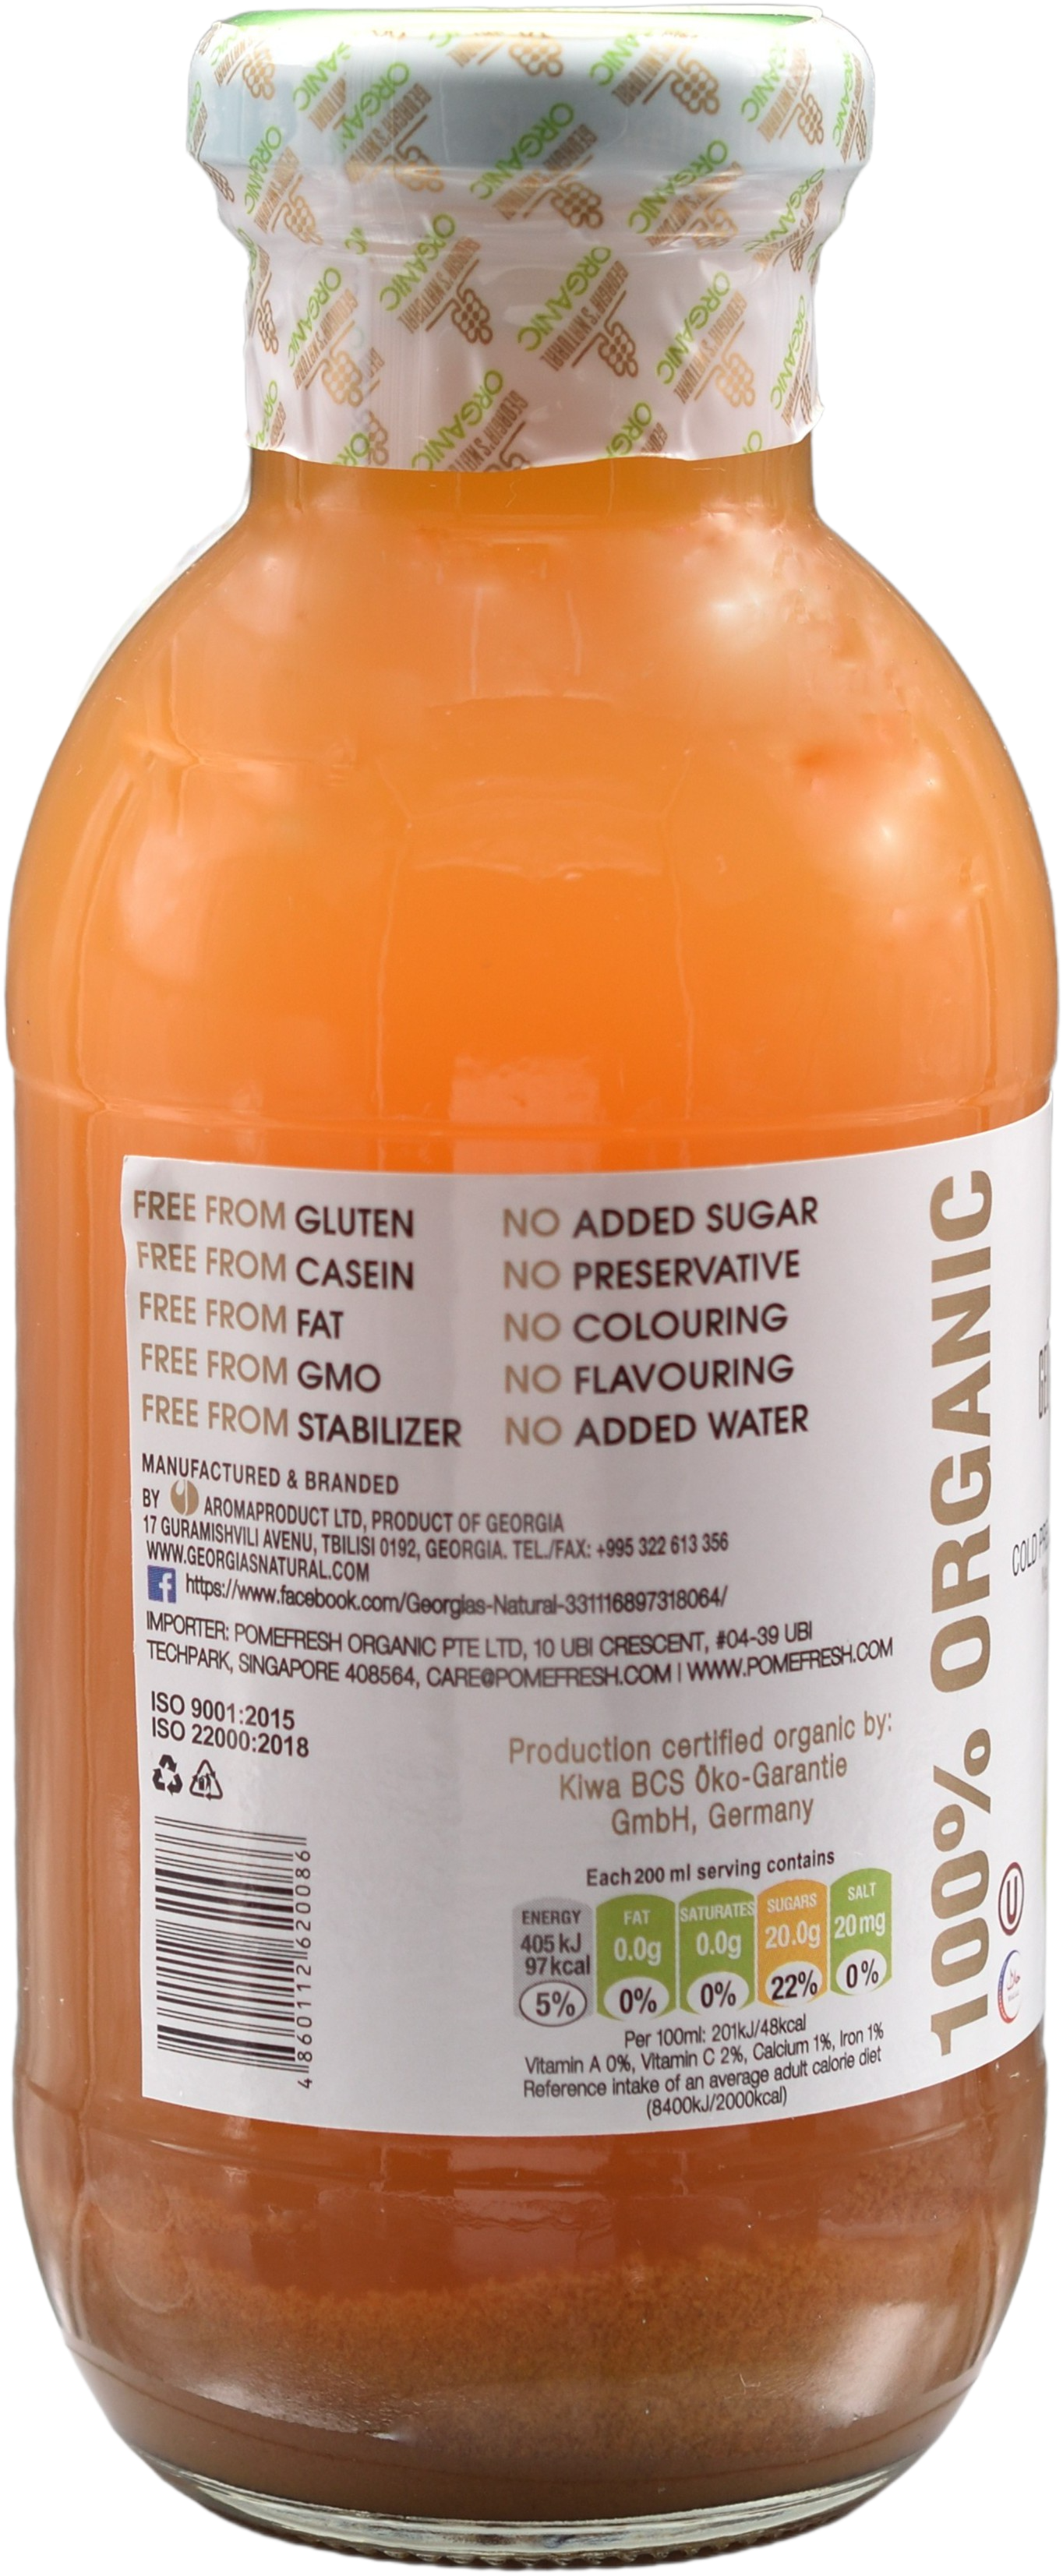 【Georgia's Natural】Apple Juice 300mLX12 Bottles | 100% Pure Organic | Immunity Booster